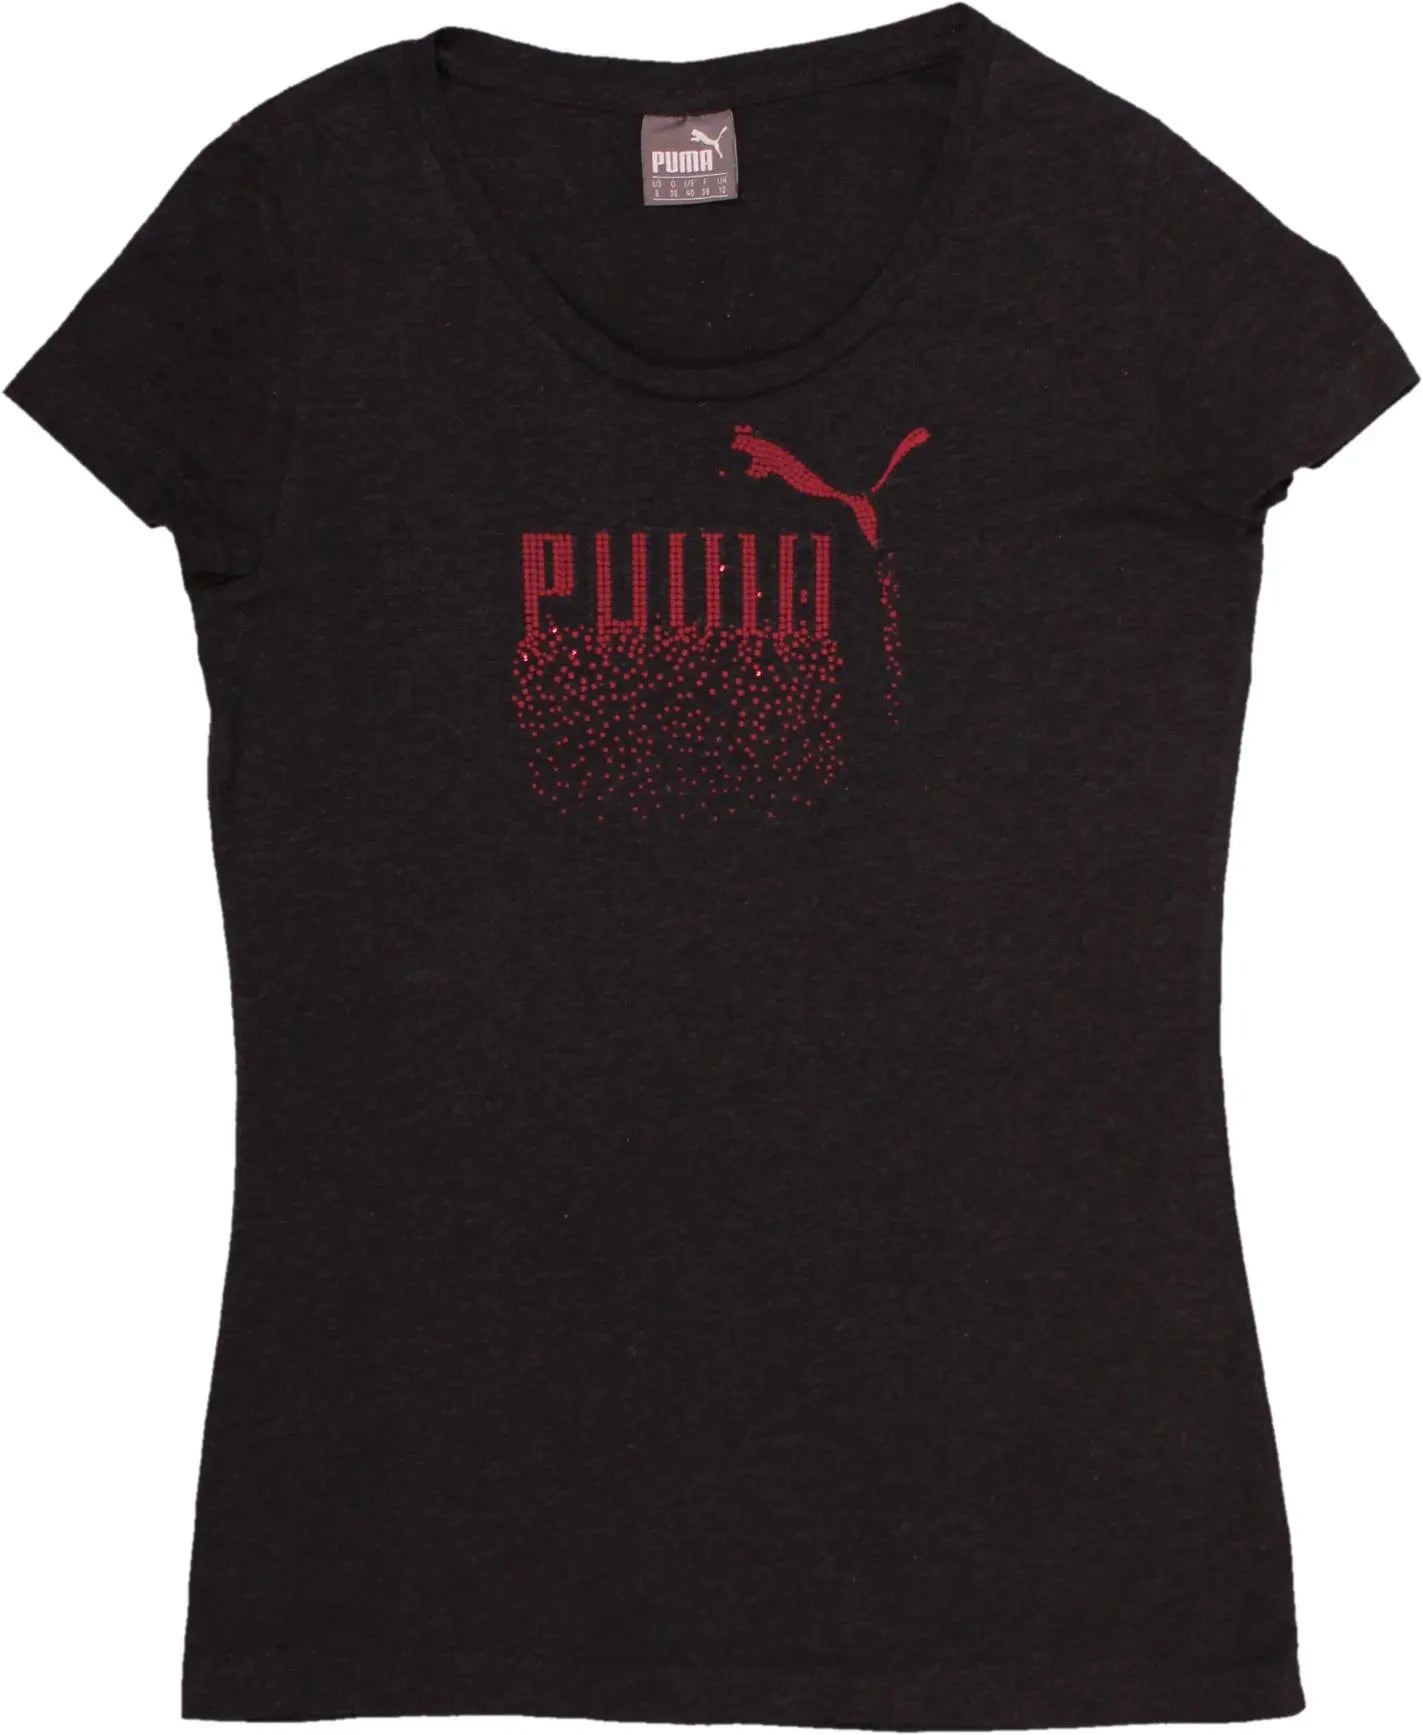 Puma - Puma T-shirt- ThriftTale.com - Vintage and second handclothing